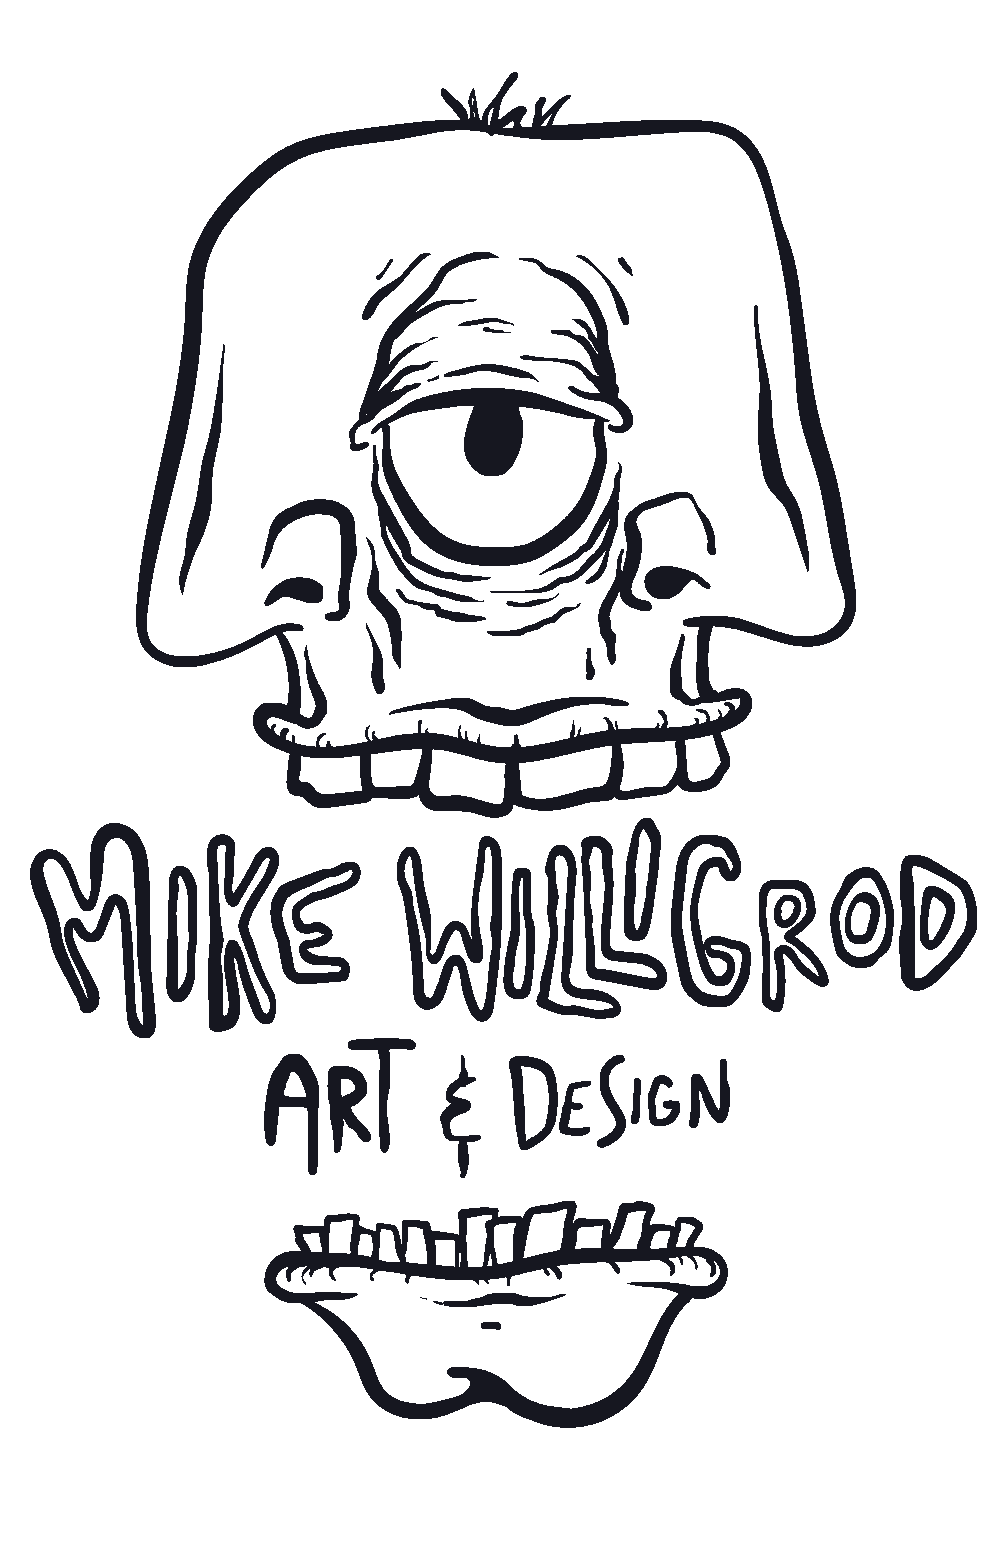 Mike Willigrod Art & Design